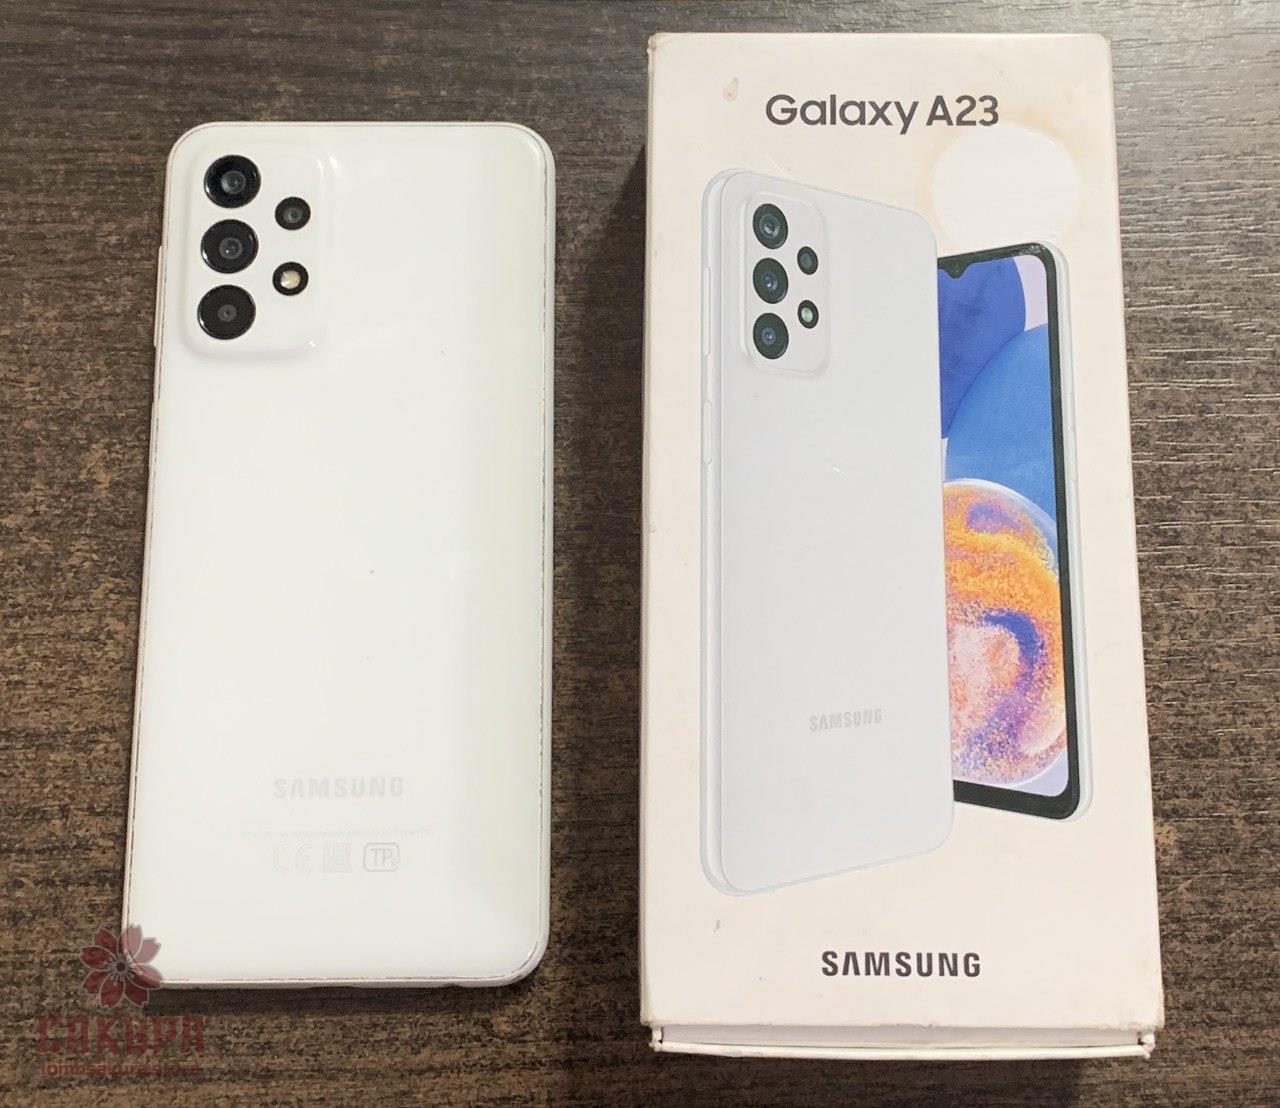 Samsung Galaxy A23 5g price in Bangladesh - Geekshook